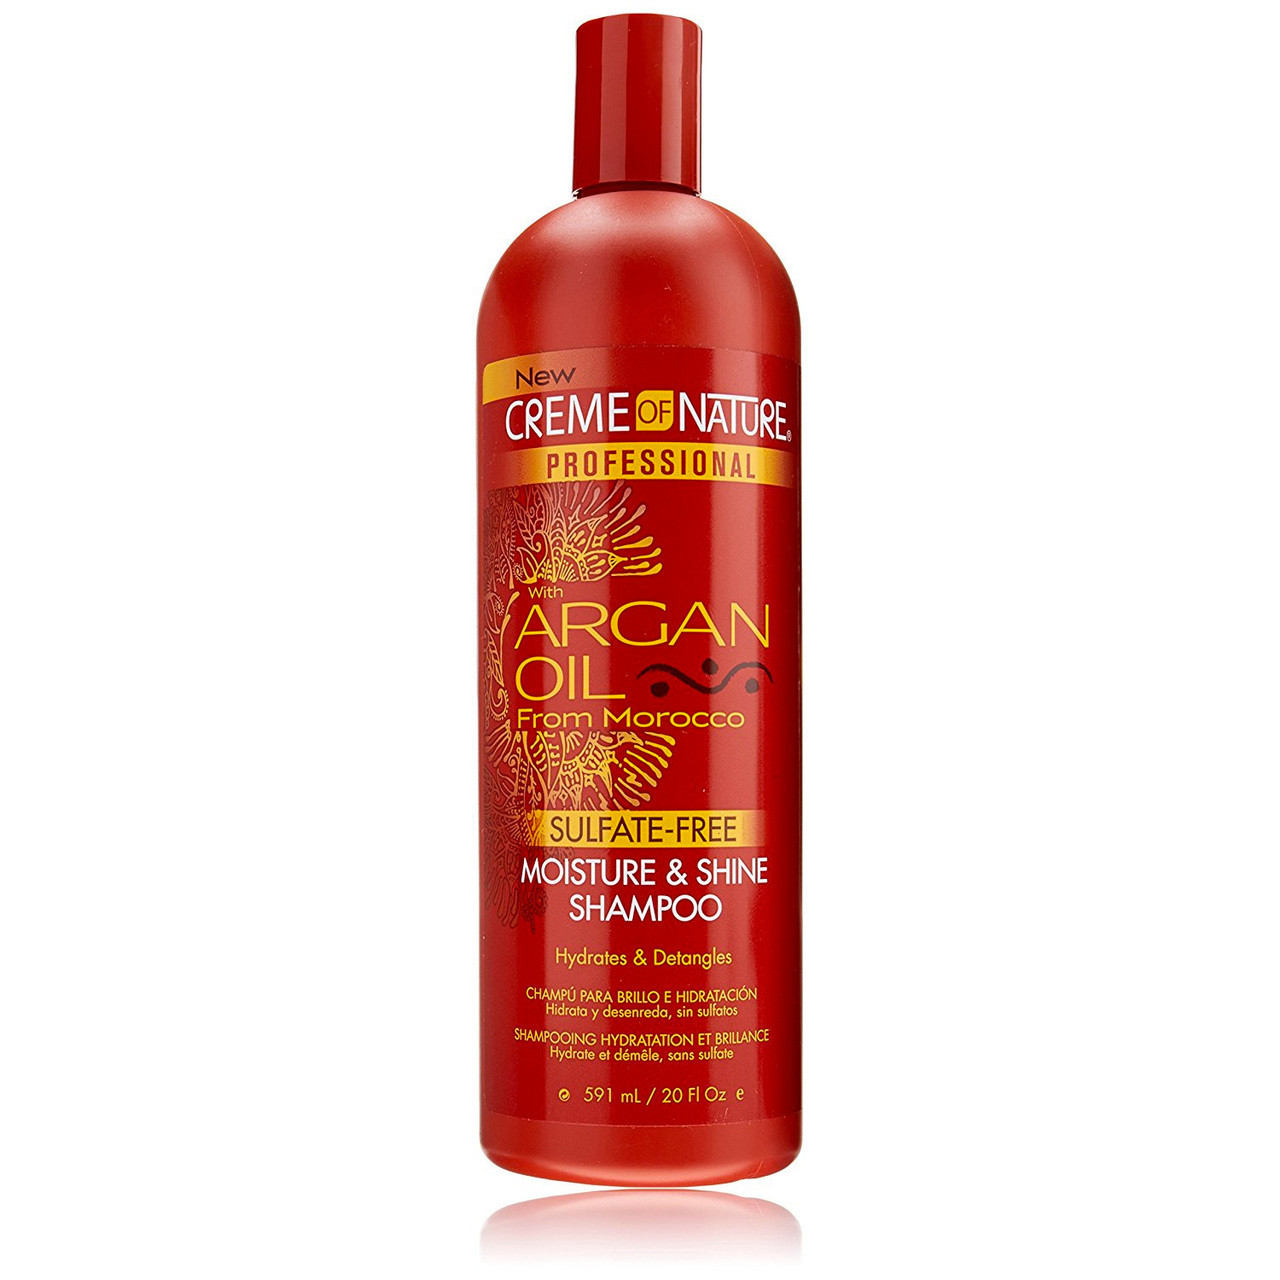 Creme of Nature Professional Argan Oil Intensive Shampoo Treatment 20 oz.